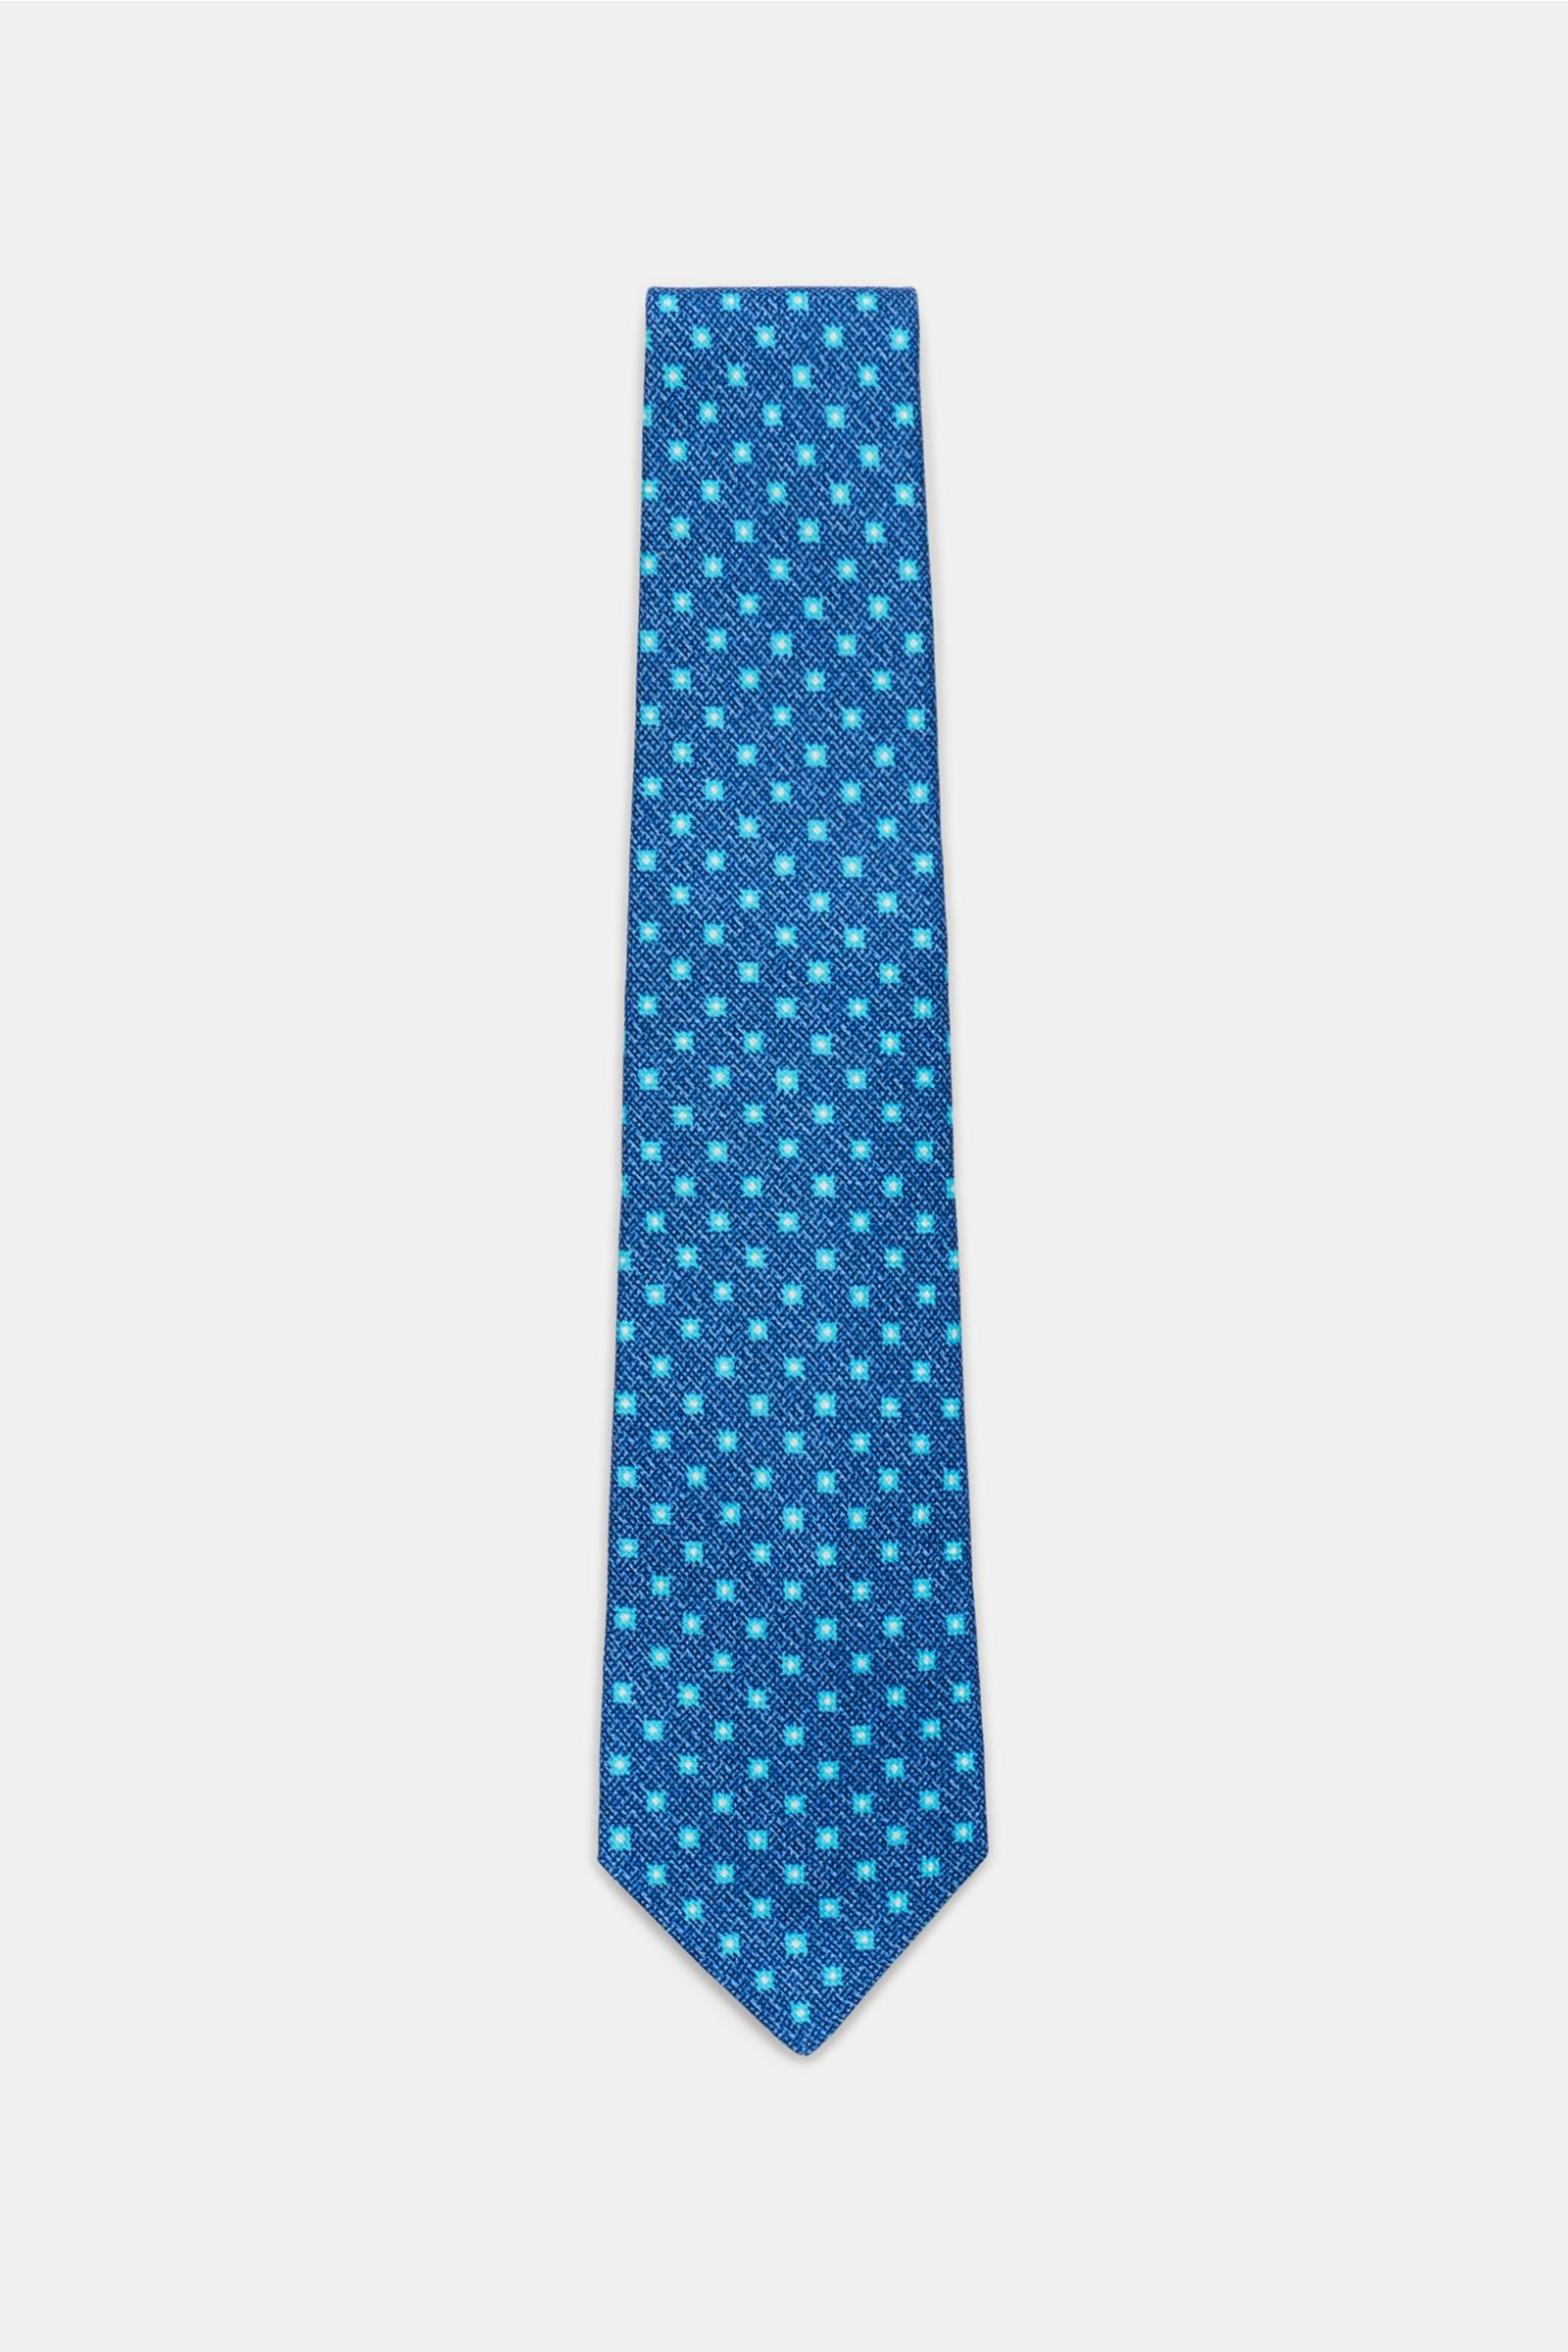 Silk tie dark blue/turquoise patterned